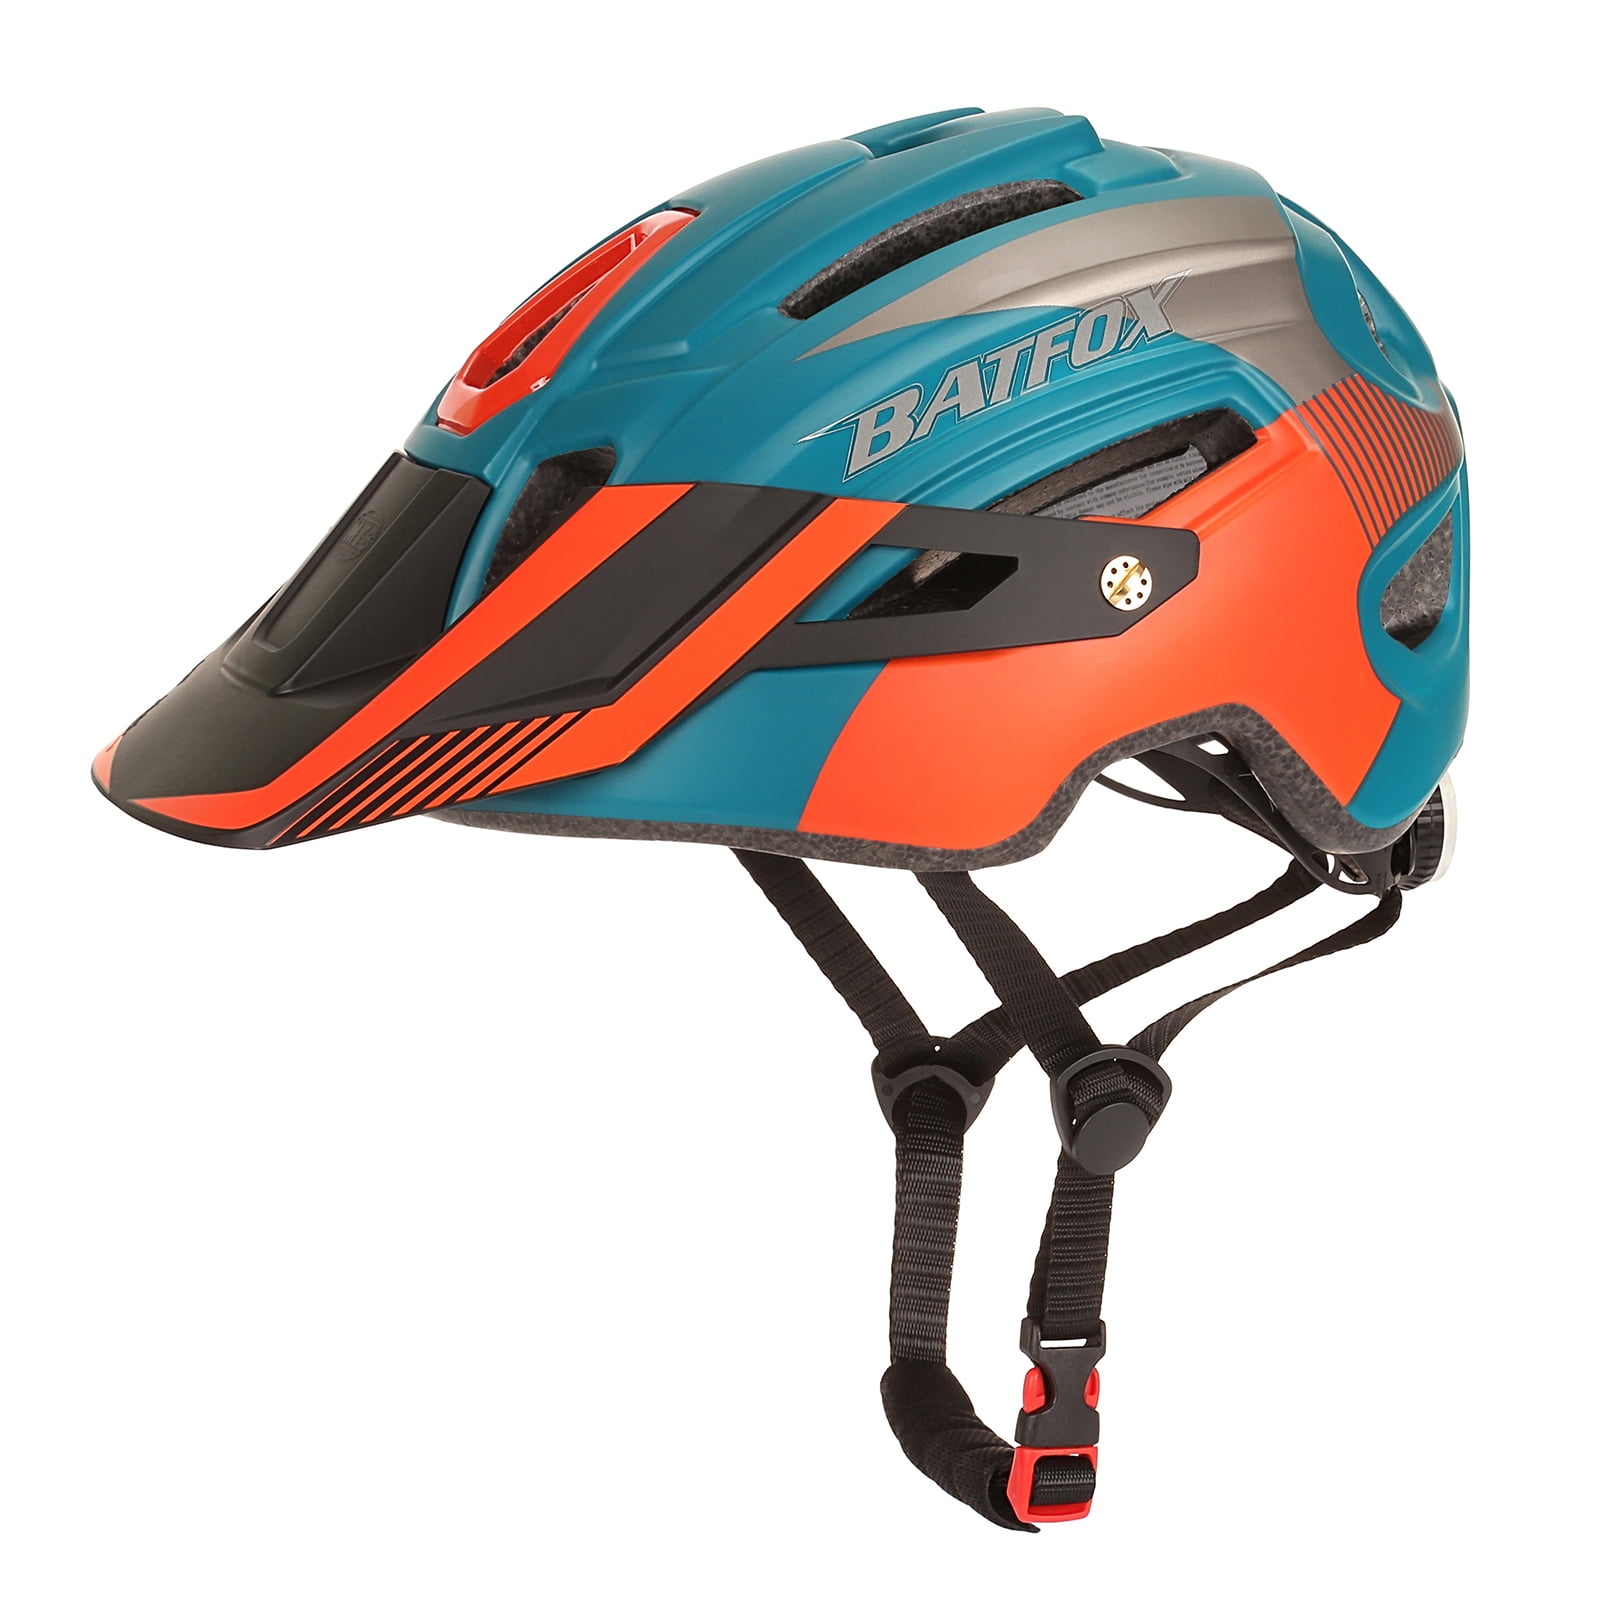 MTB Road Bike Cycling Helmet Mountain Outdoor Sport Bicycle Integrally Helmets 